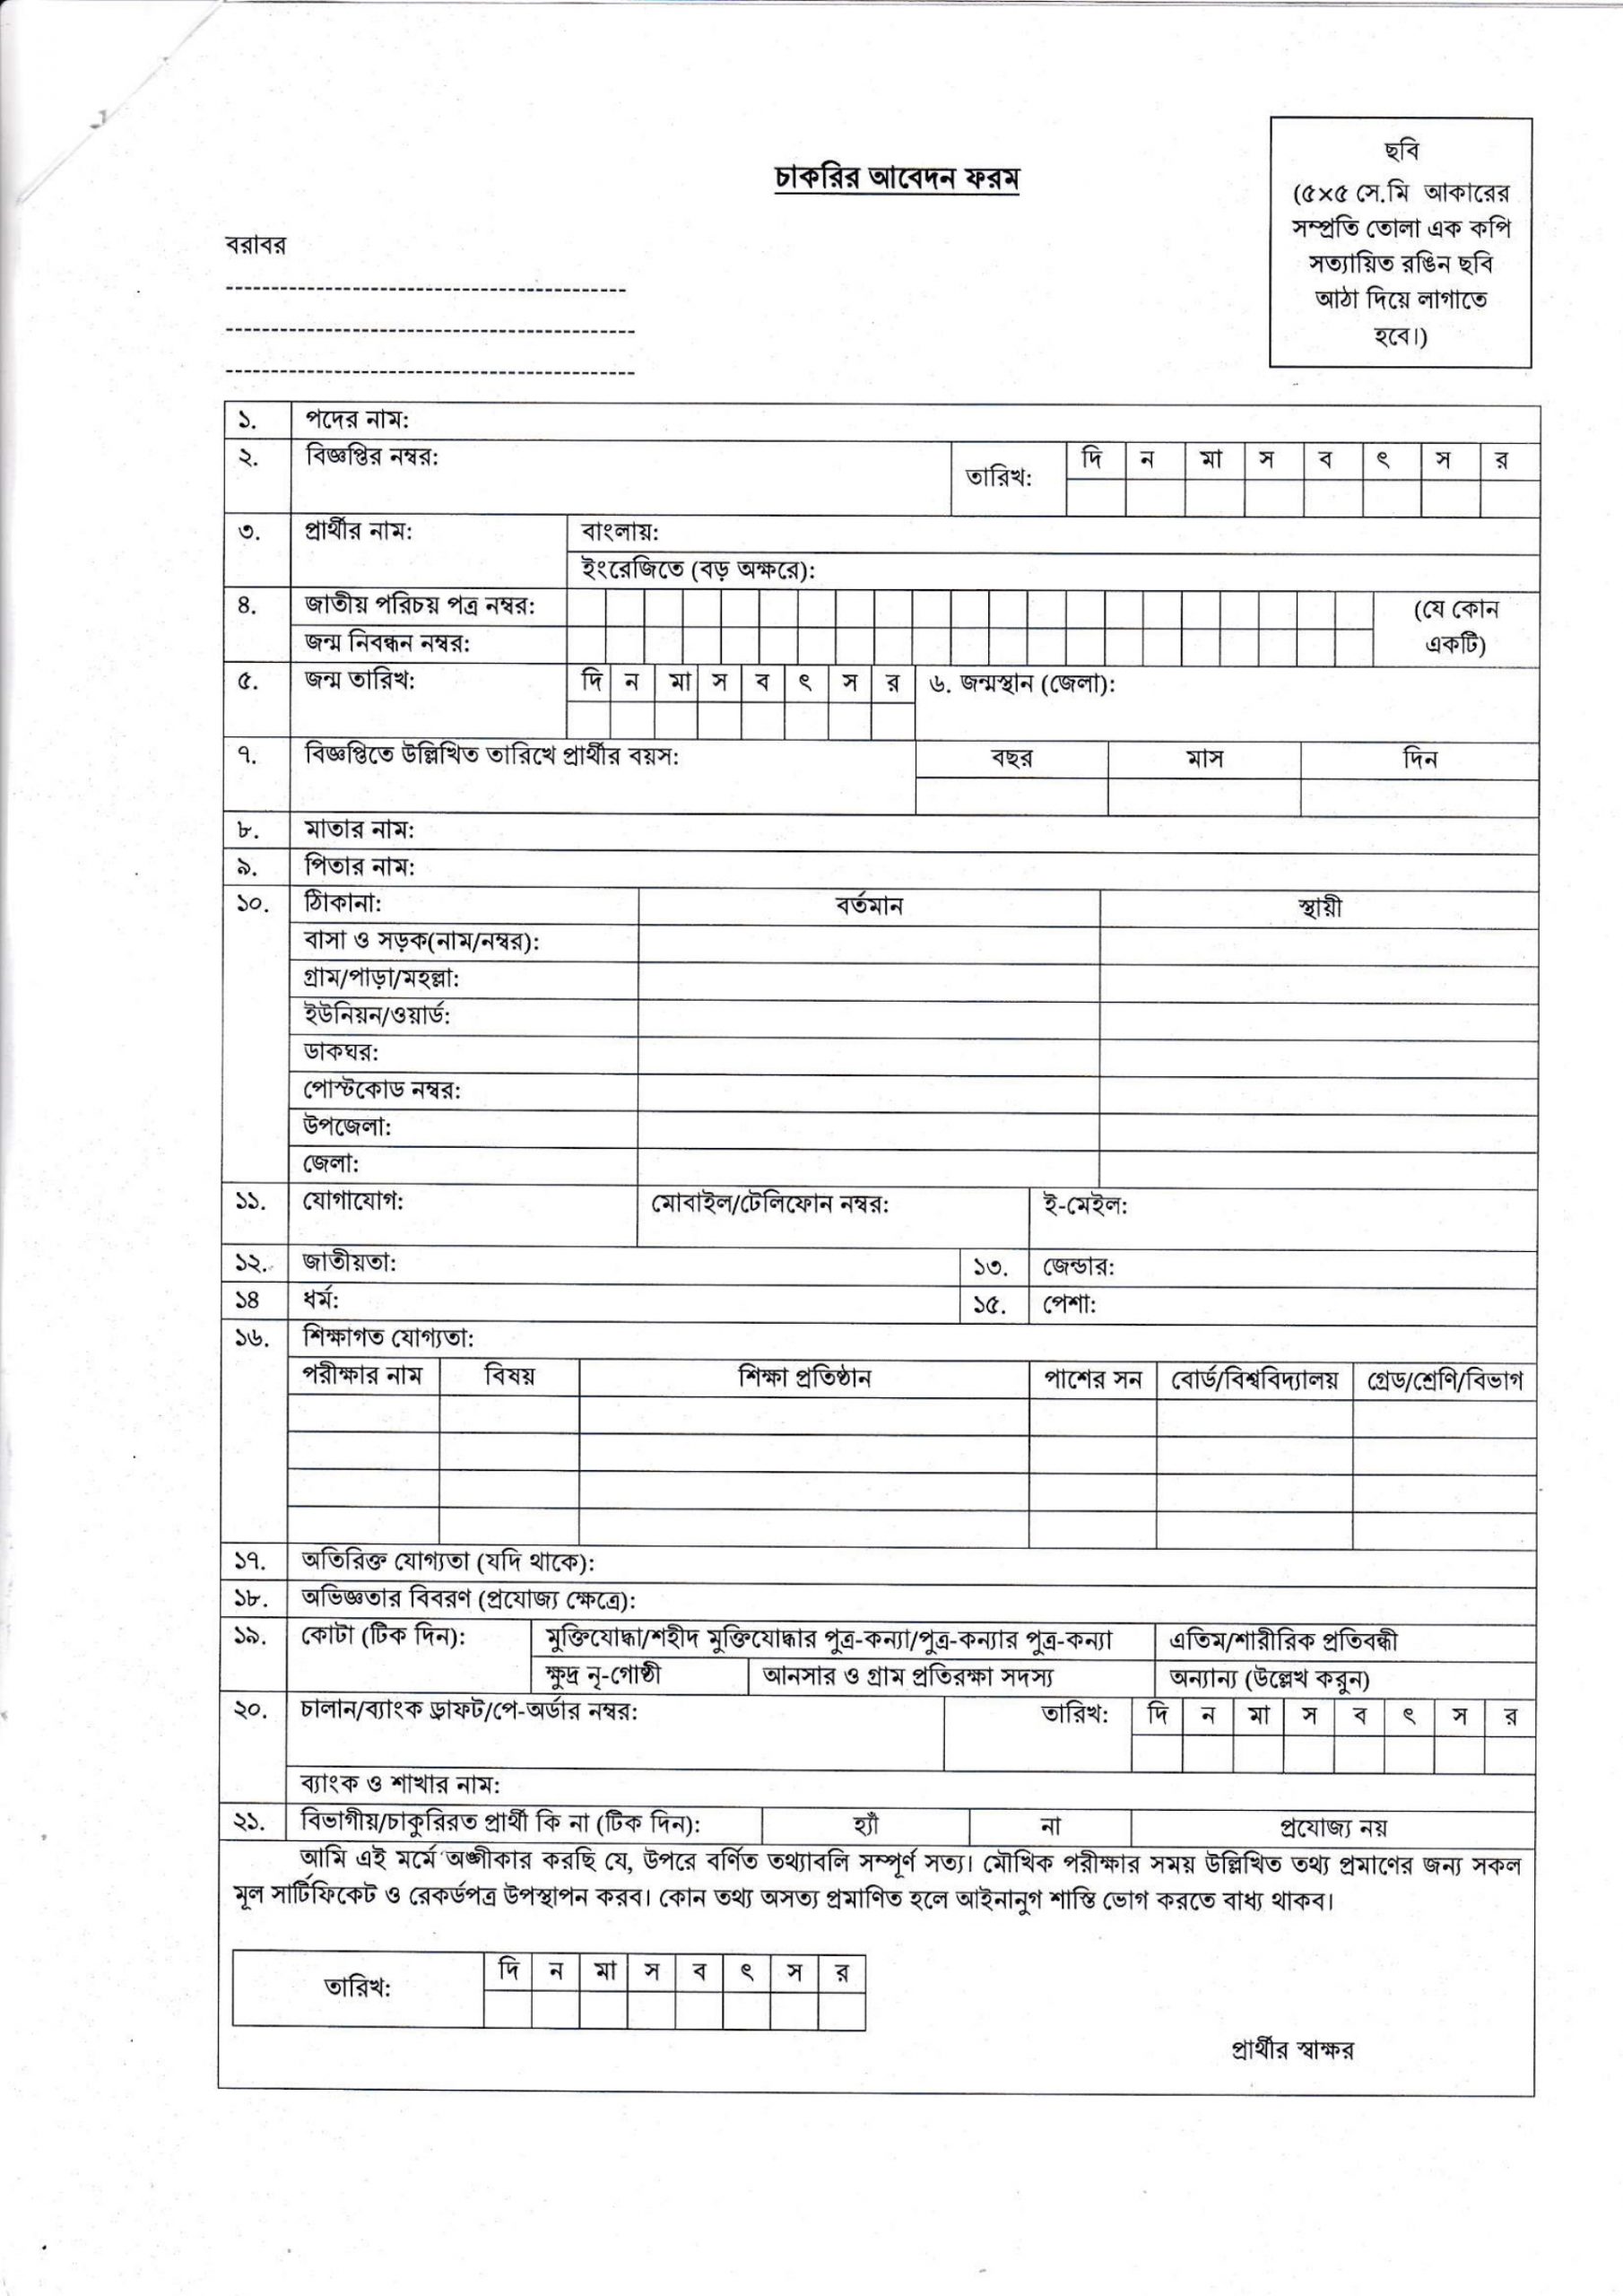 Joypurhat DC Office Job Circular 2021 জয়পুরহাট জেলা প্রশাসকের কার্যালয় নিয়োগ বিজ্ঞপ্তি ২০২১, Joypurhat District Commissioner Office Job Circular 2021-4